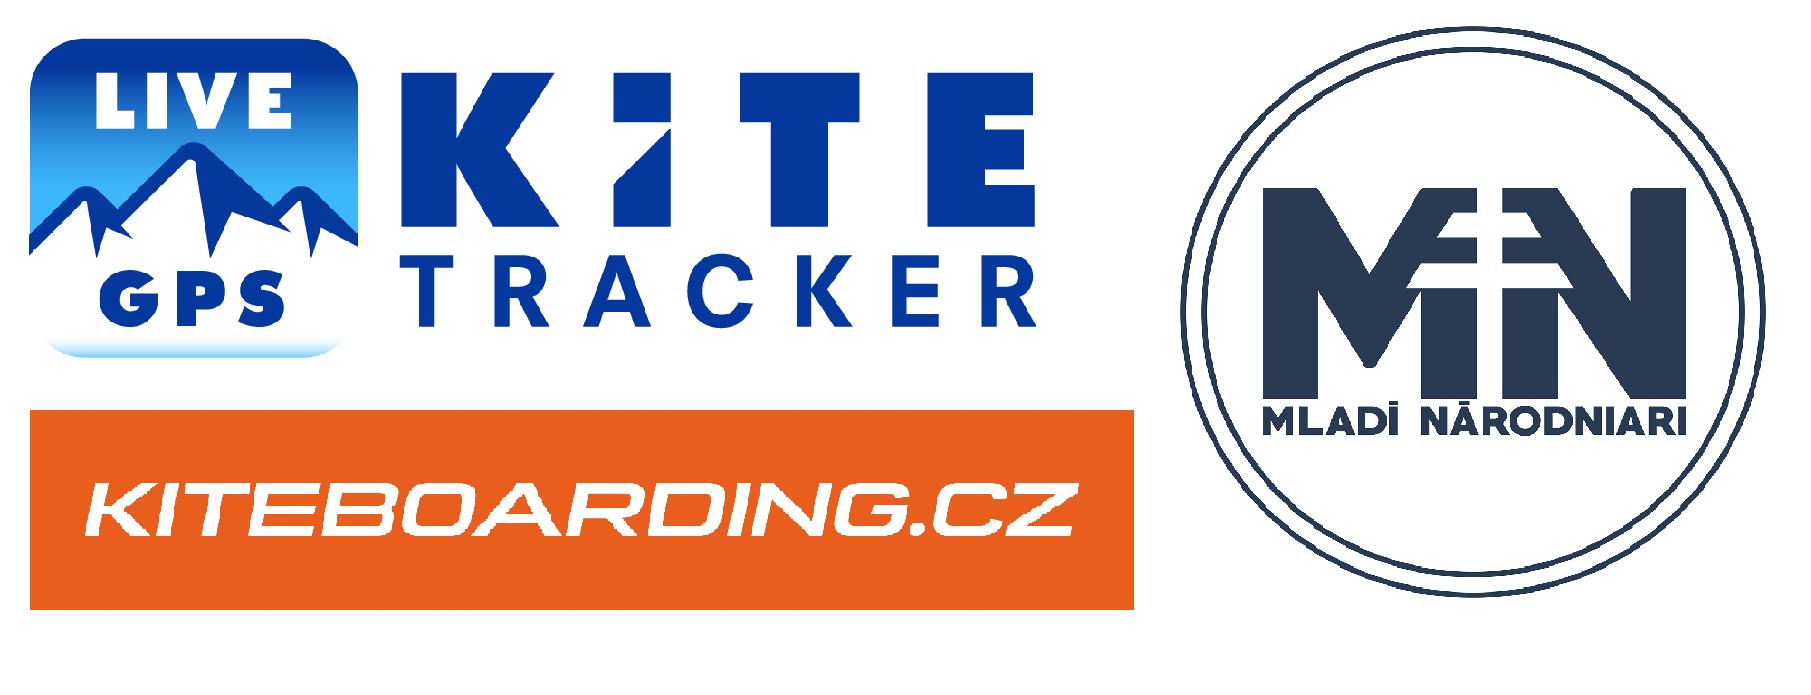 Kitetracker-Kiteboarding-cz-MN-kite-partners.png